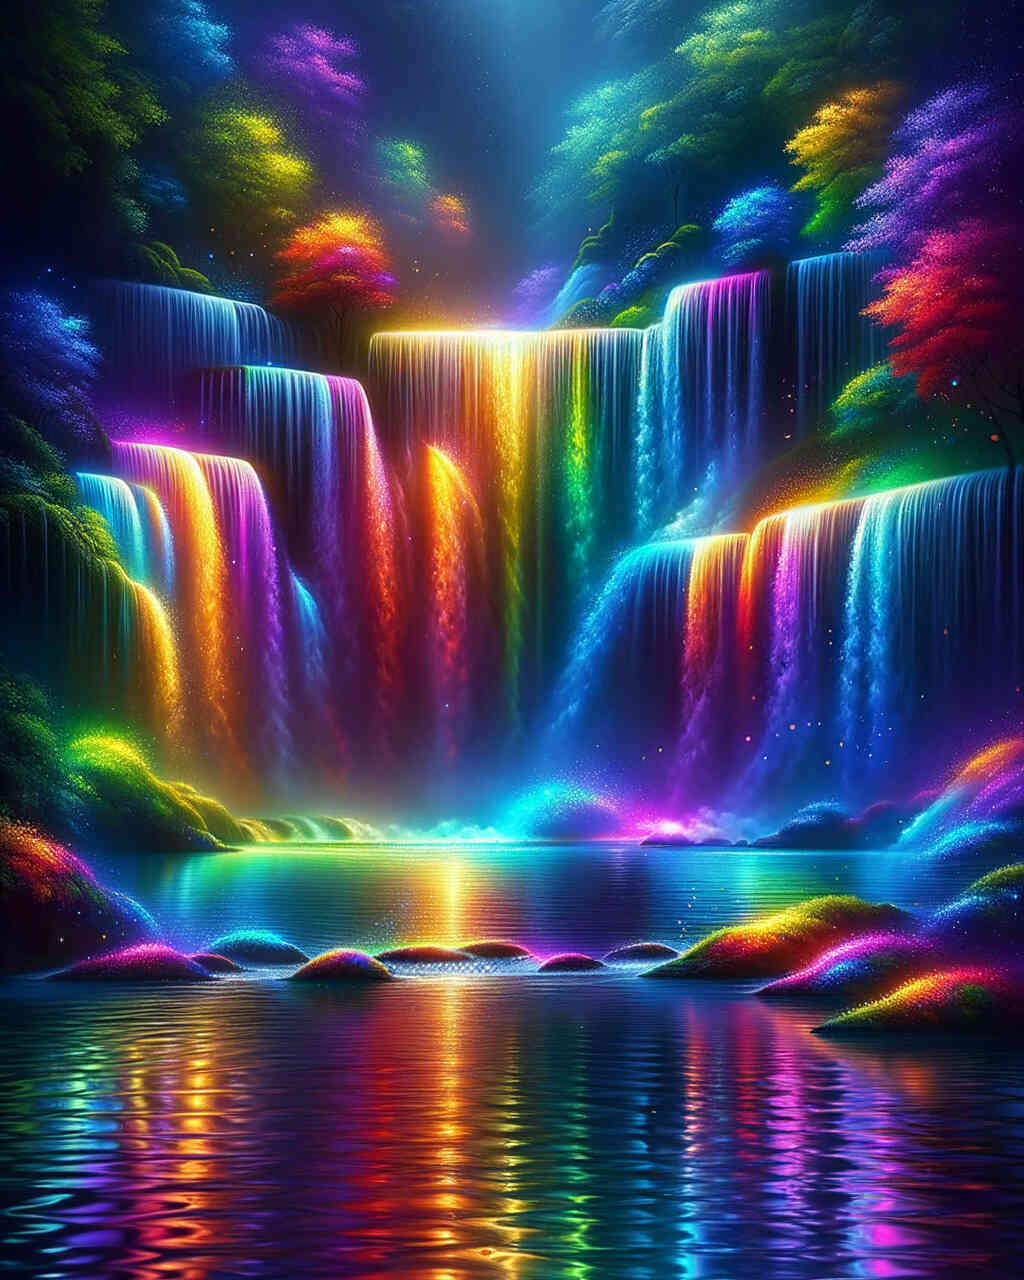 Diamond Painting - Regenbogen Wasserfall